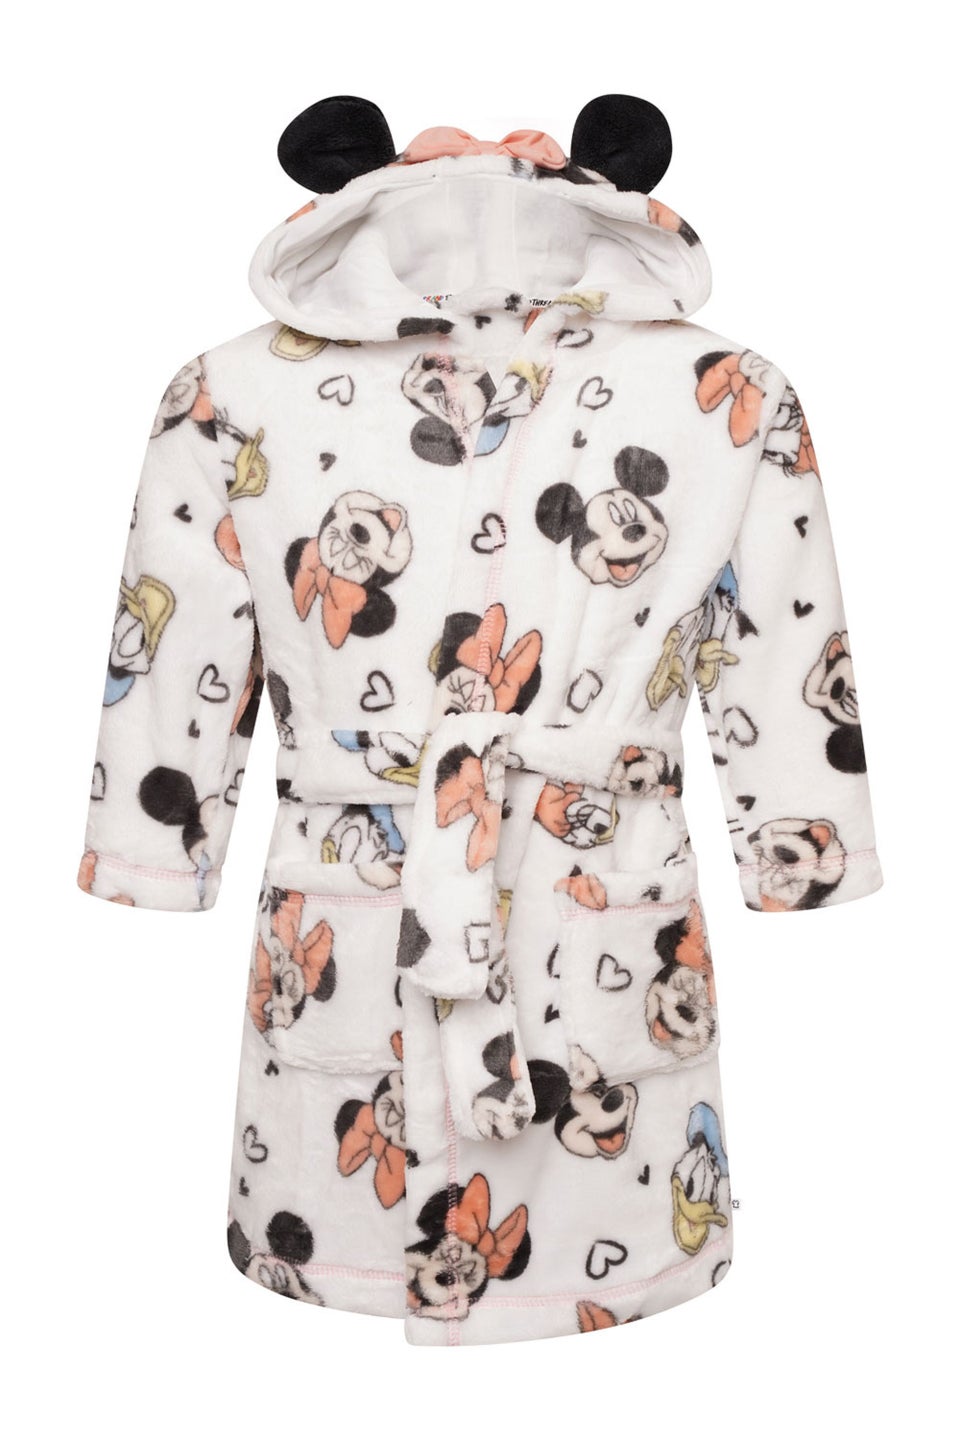 Детский халат с Минни Маус Brand Threads Disney, белый